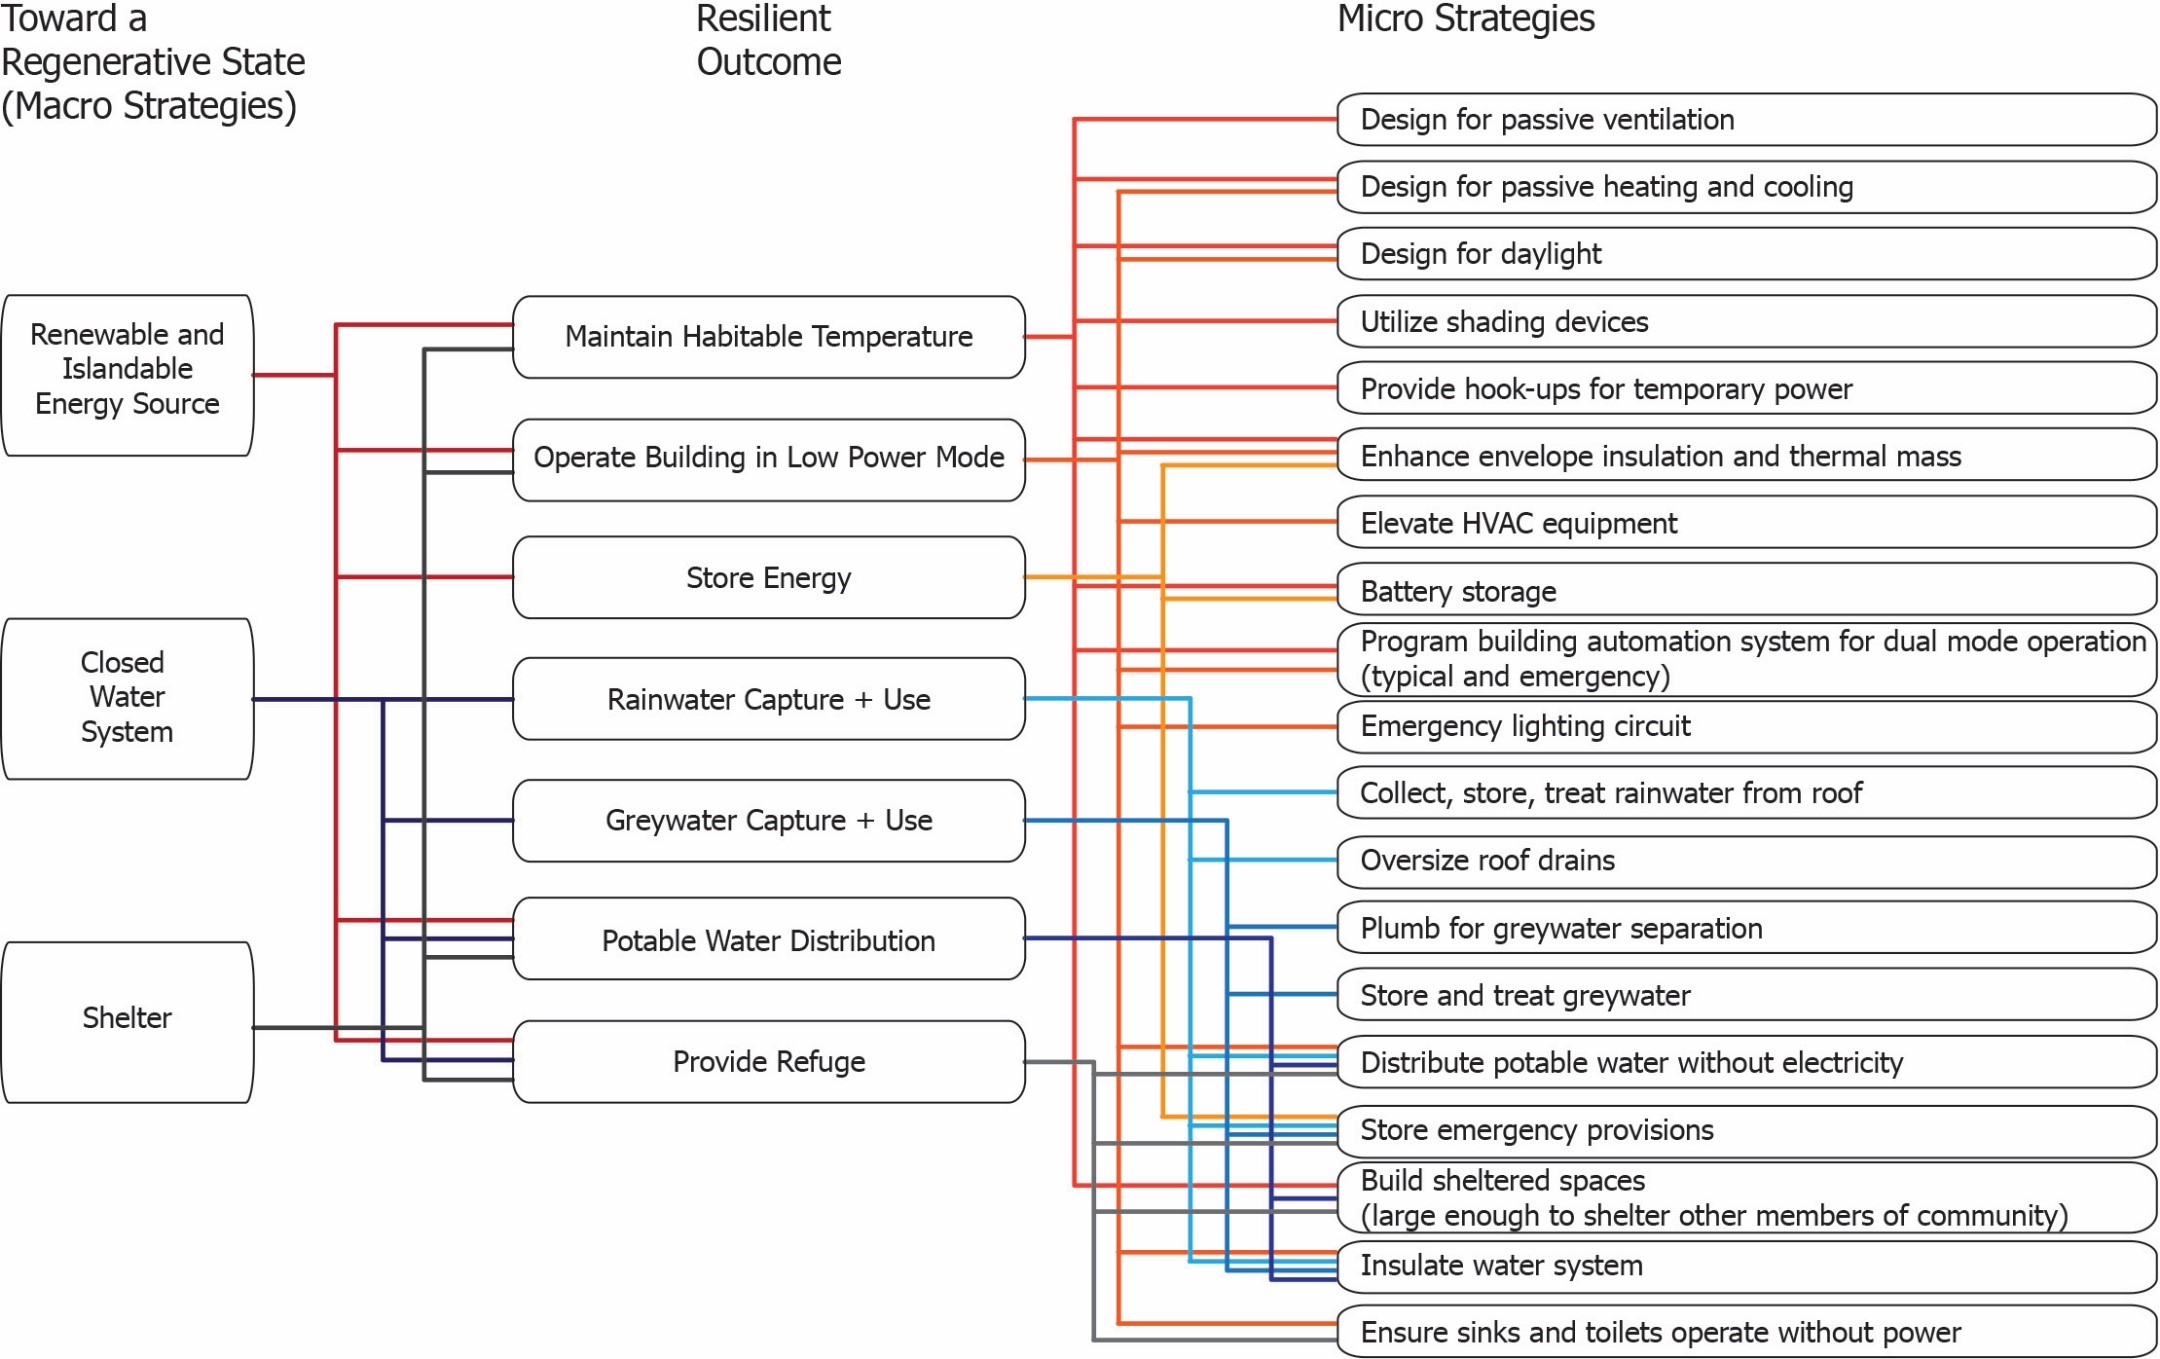 Flow chart for regenerative design processes